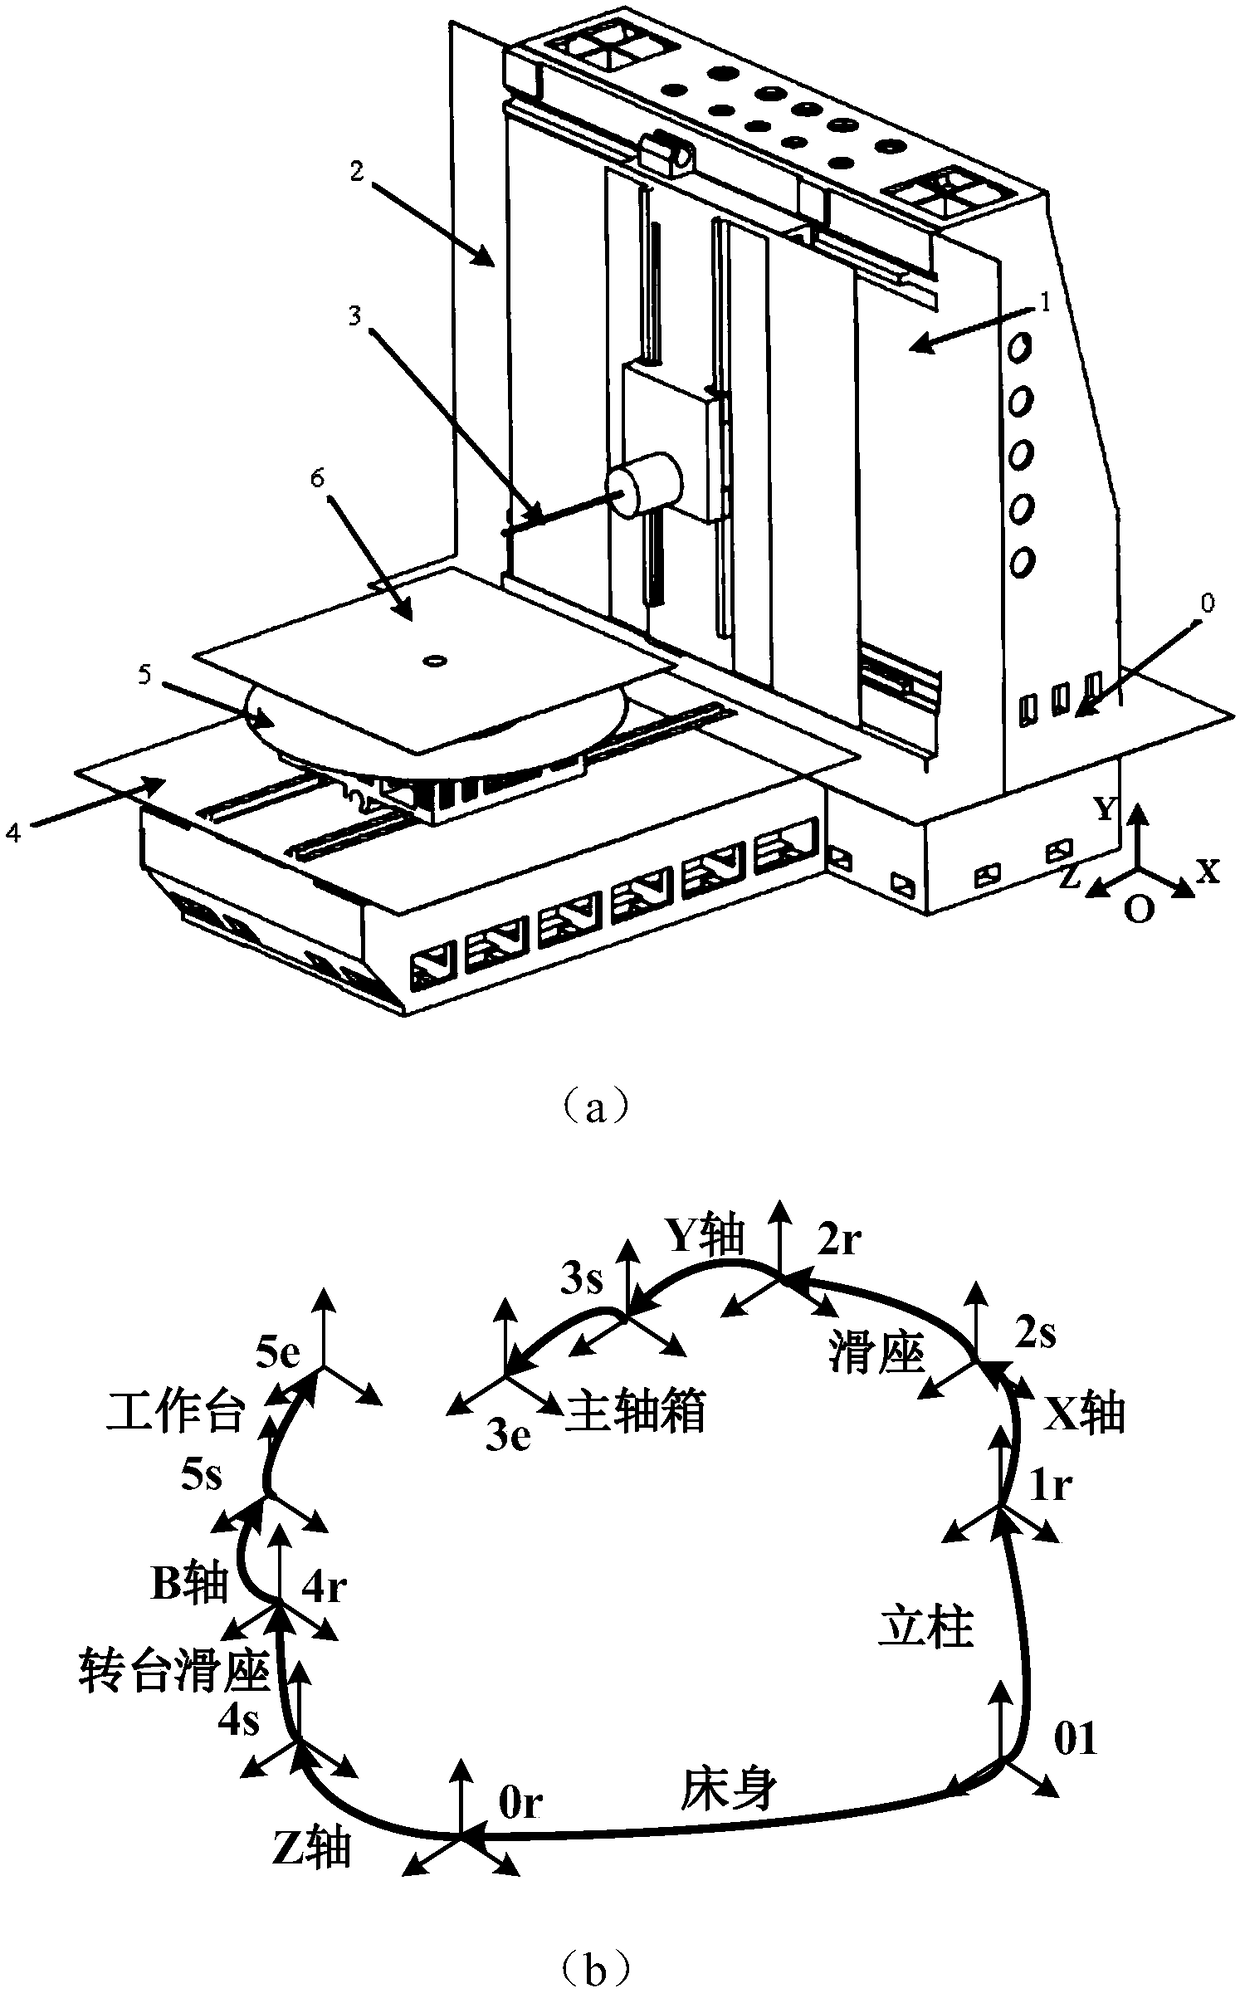 STL file-based precision machine tool computer-aided tolerance analysis method